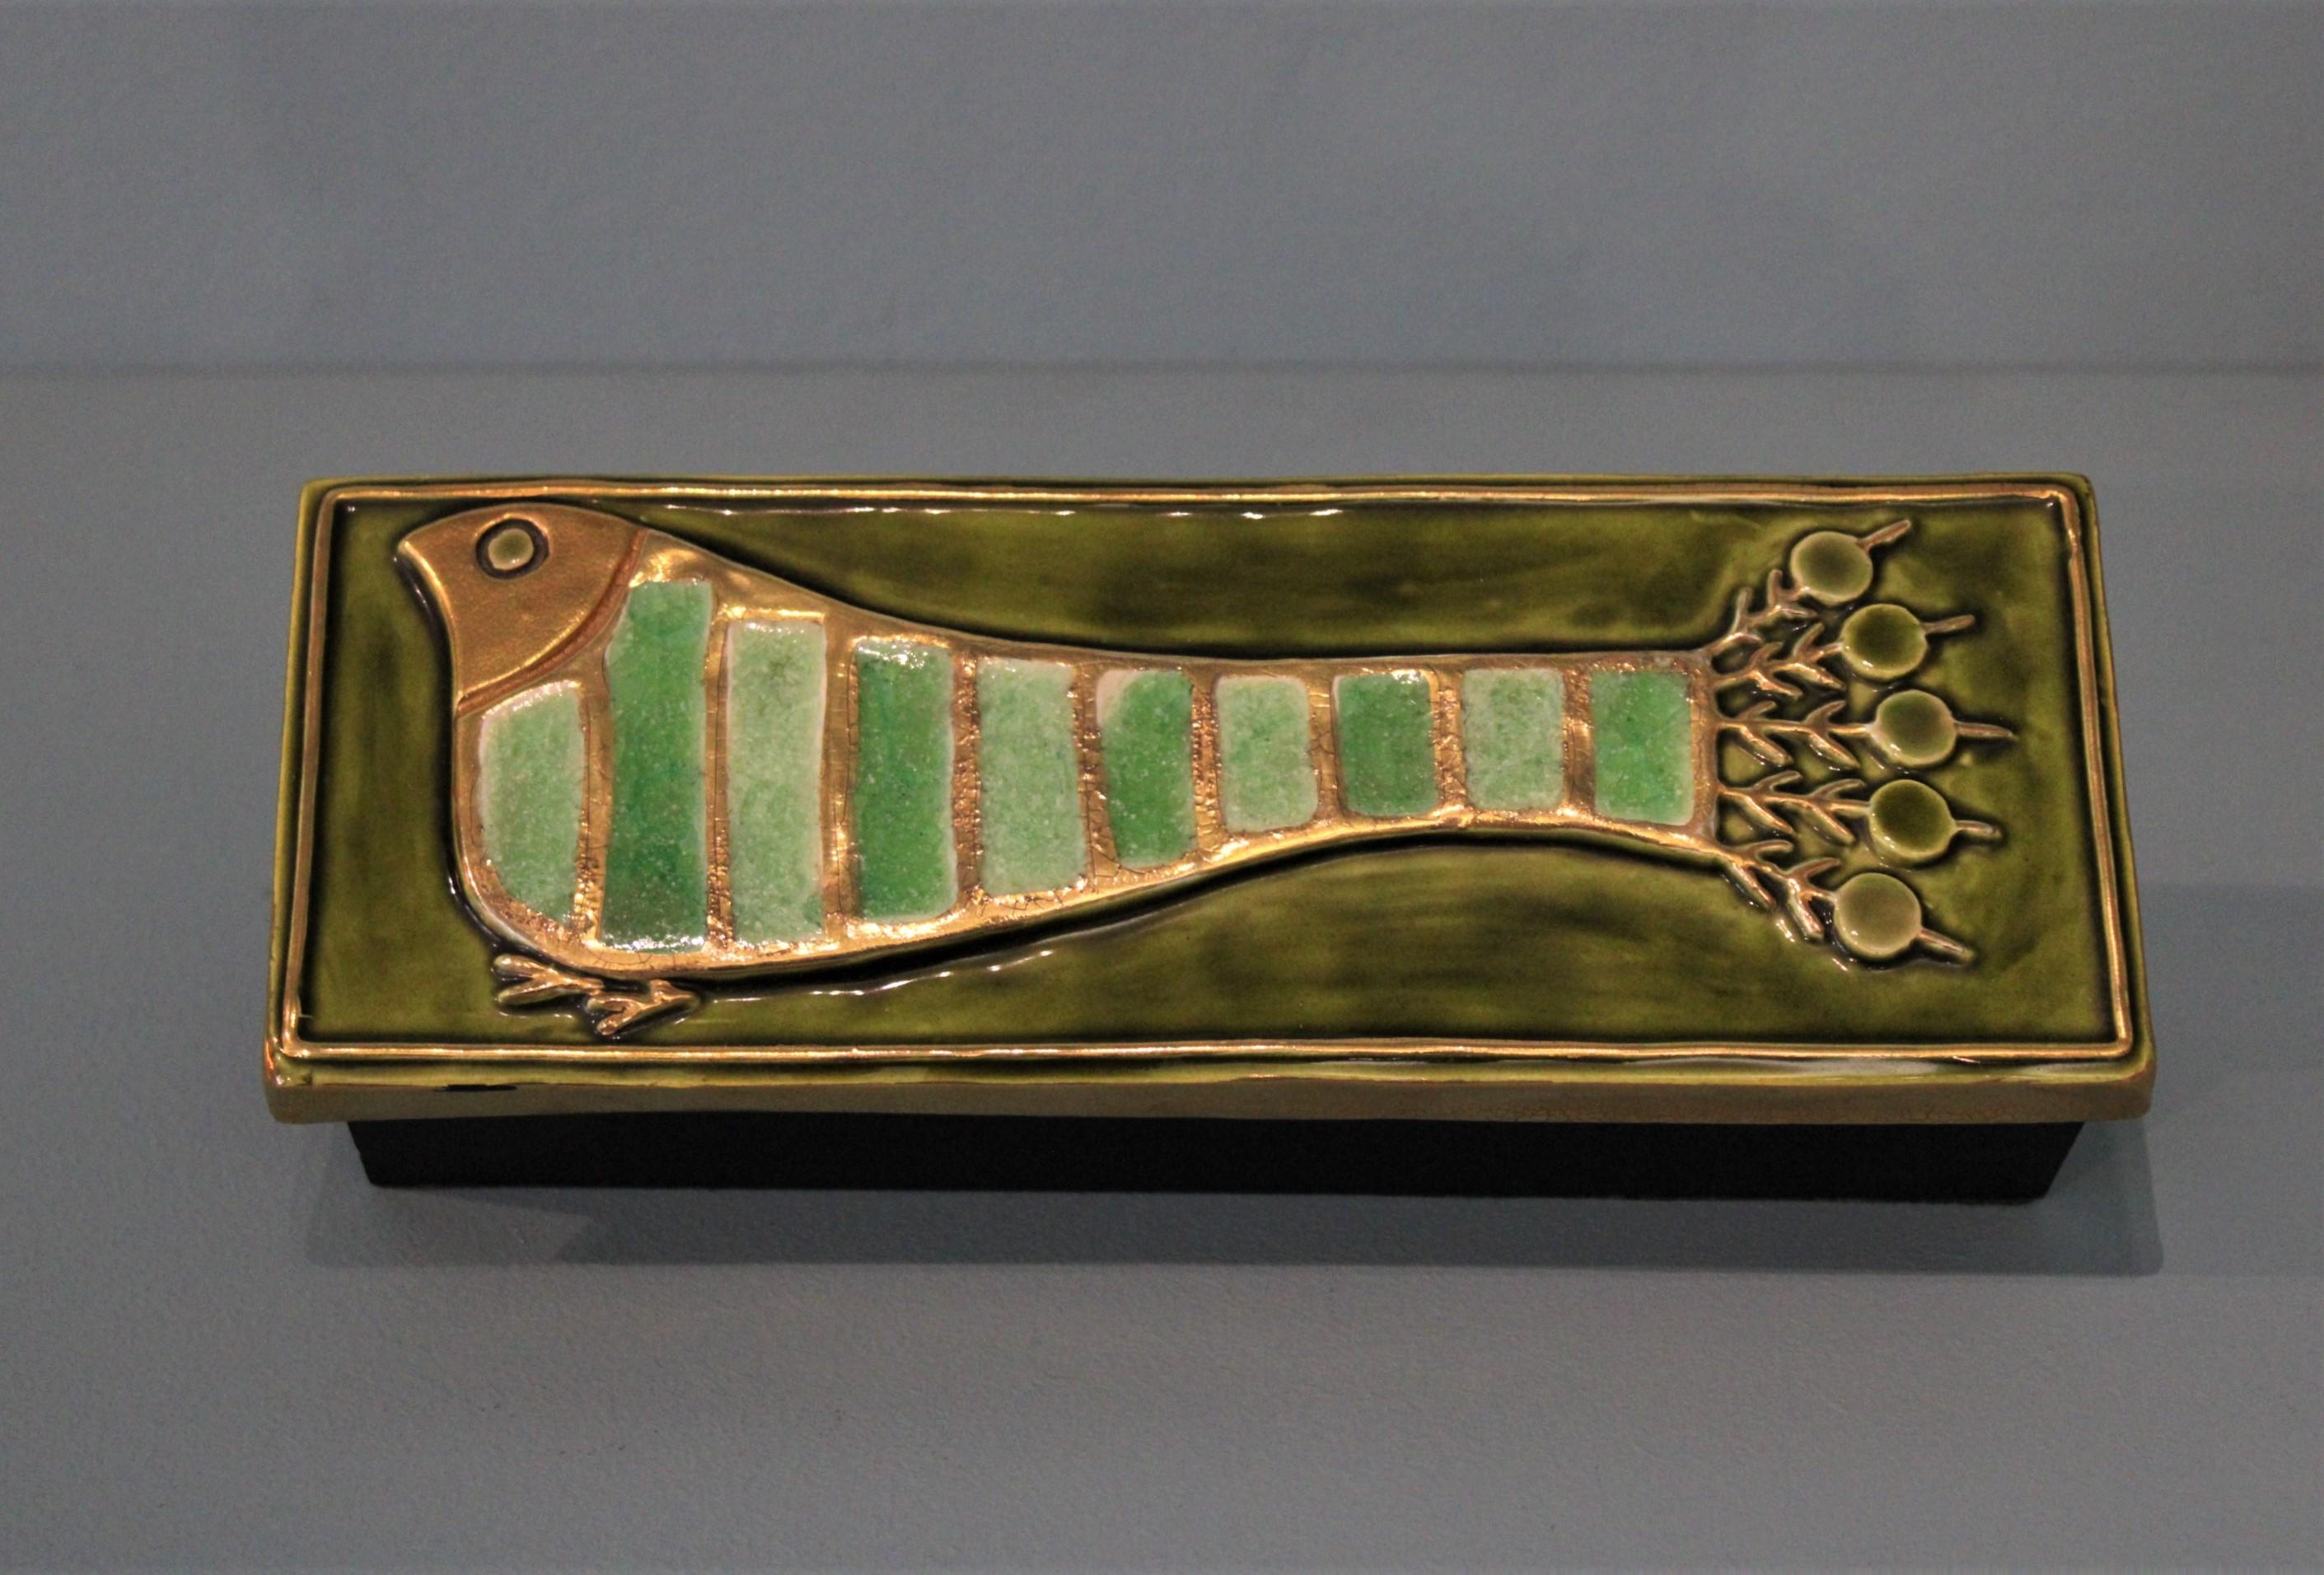 Bird ceramic box, by Mithe Espelt.